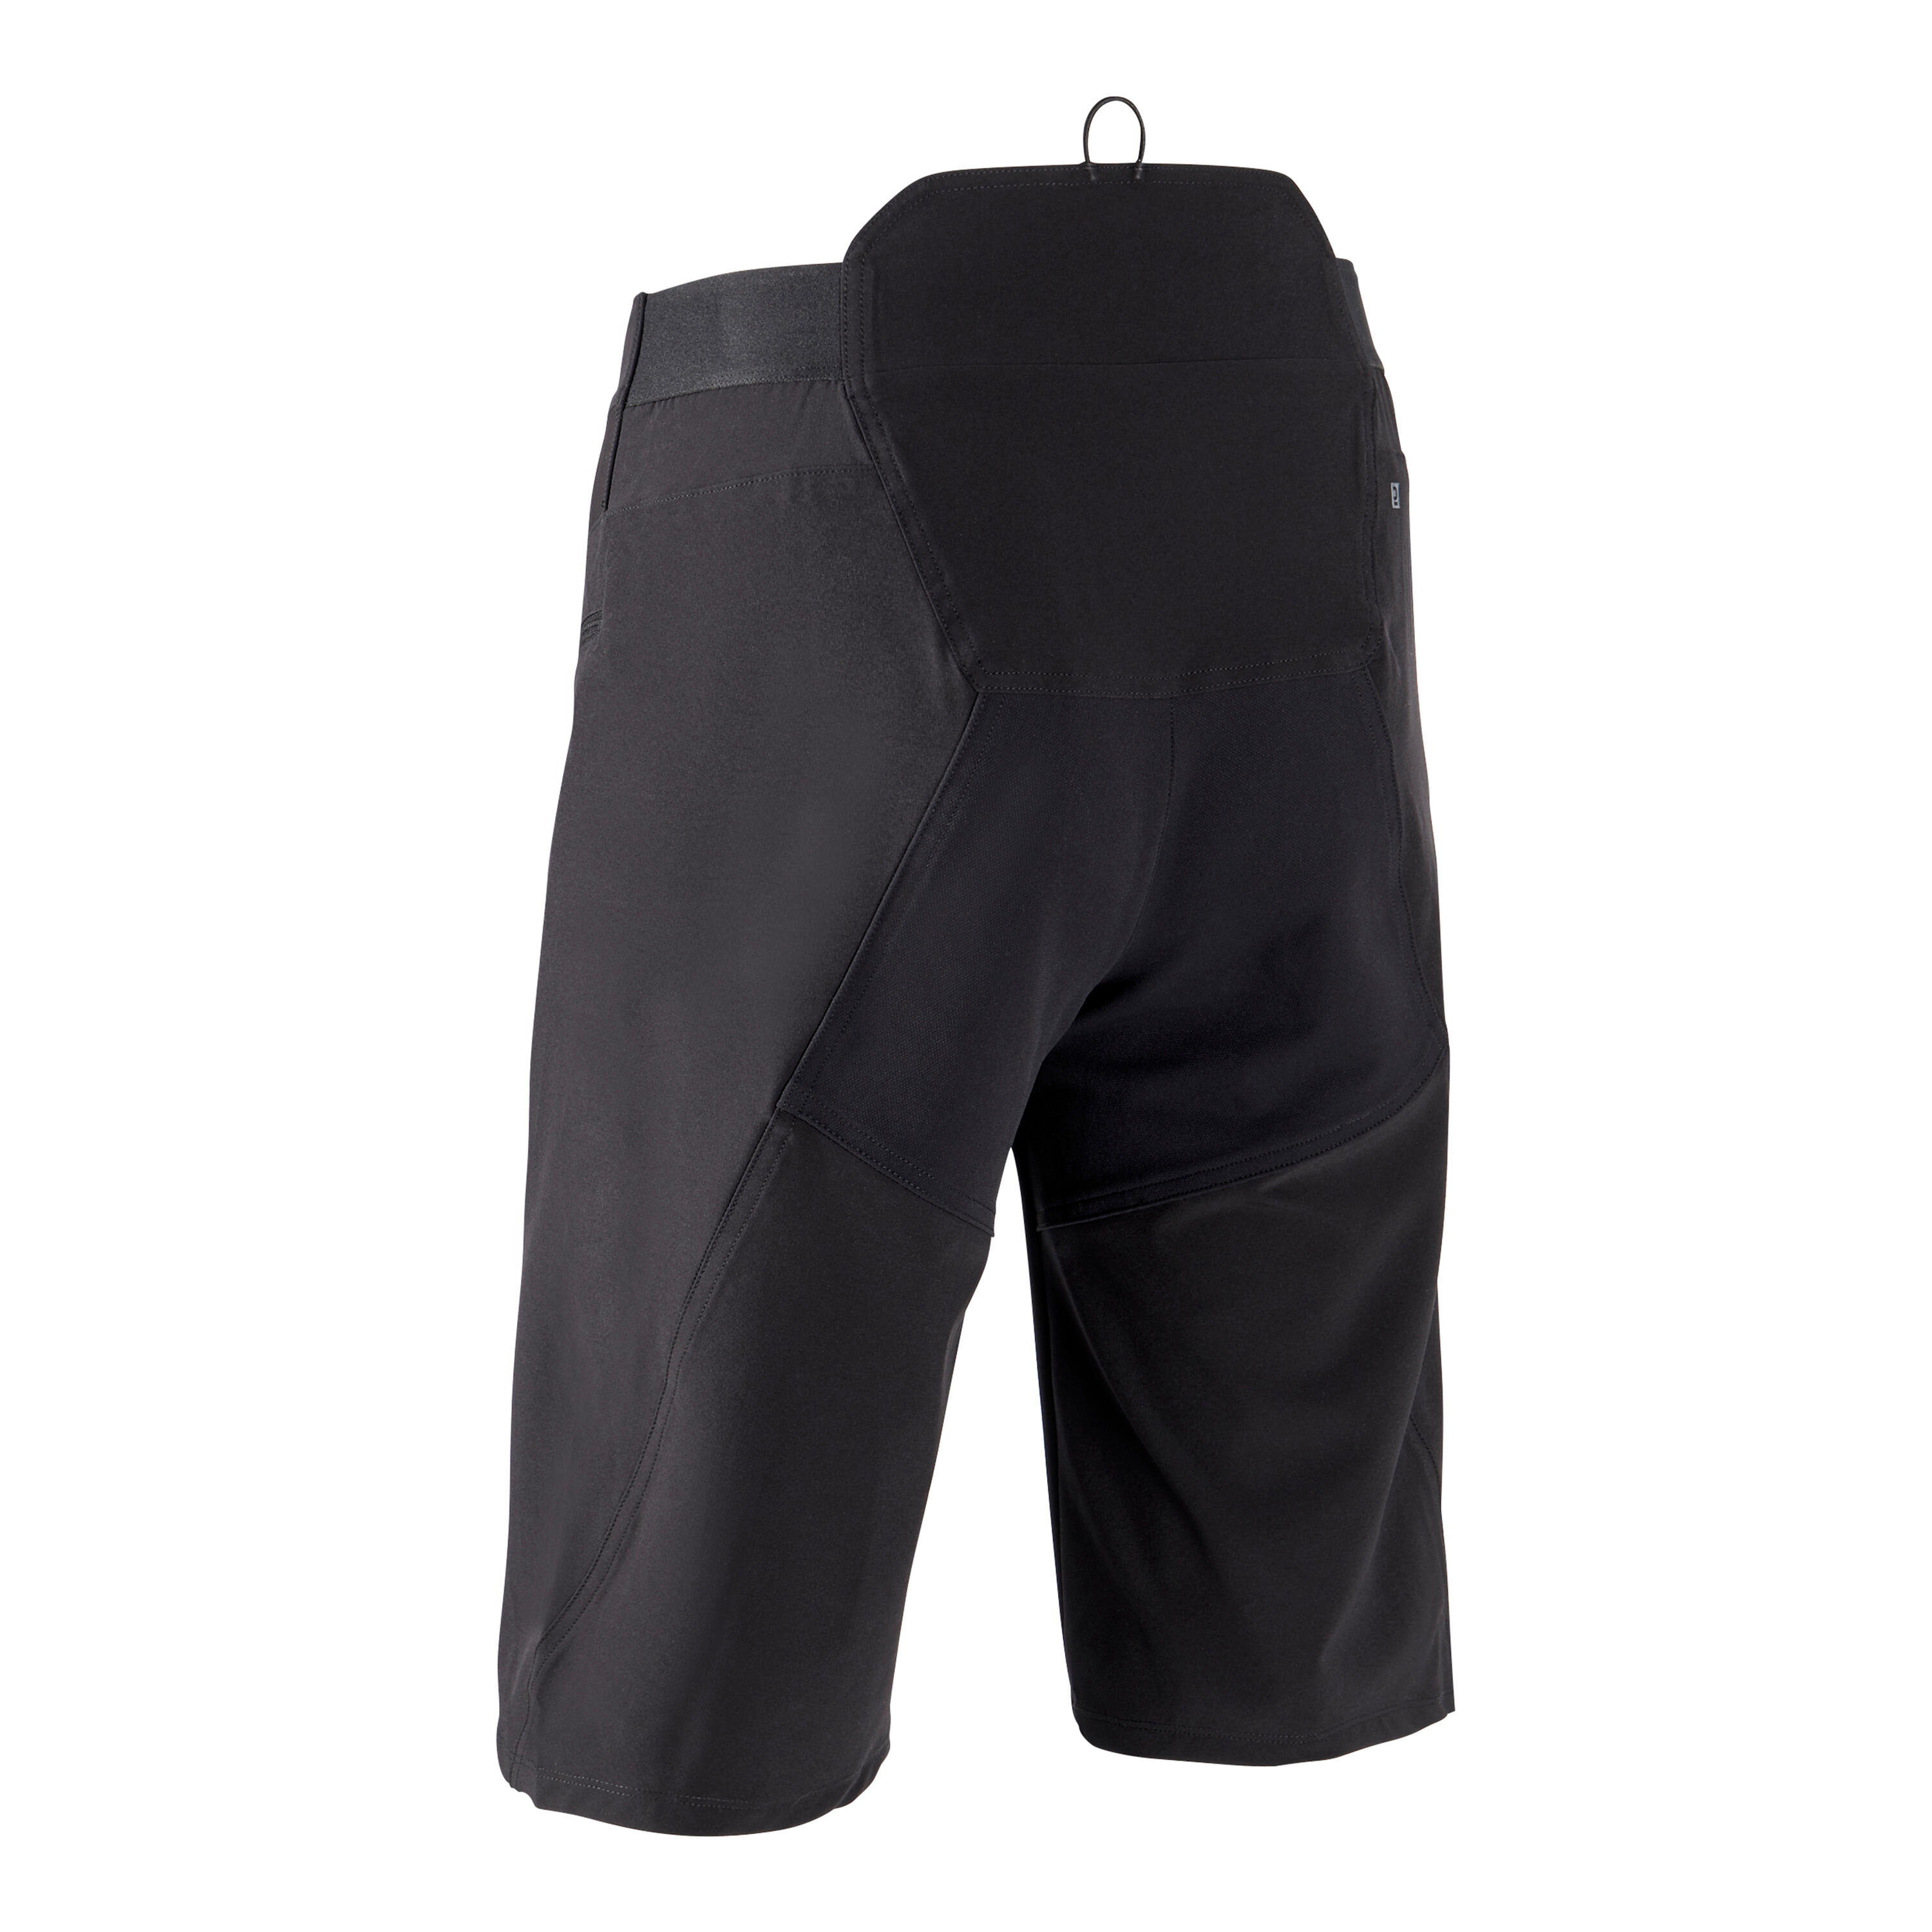 moret ultra bike shorts